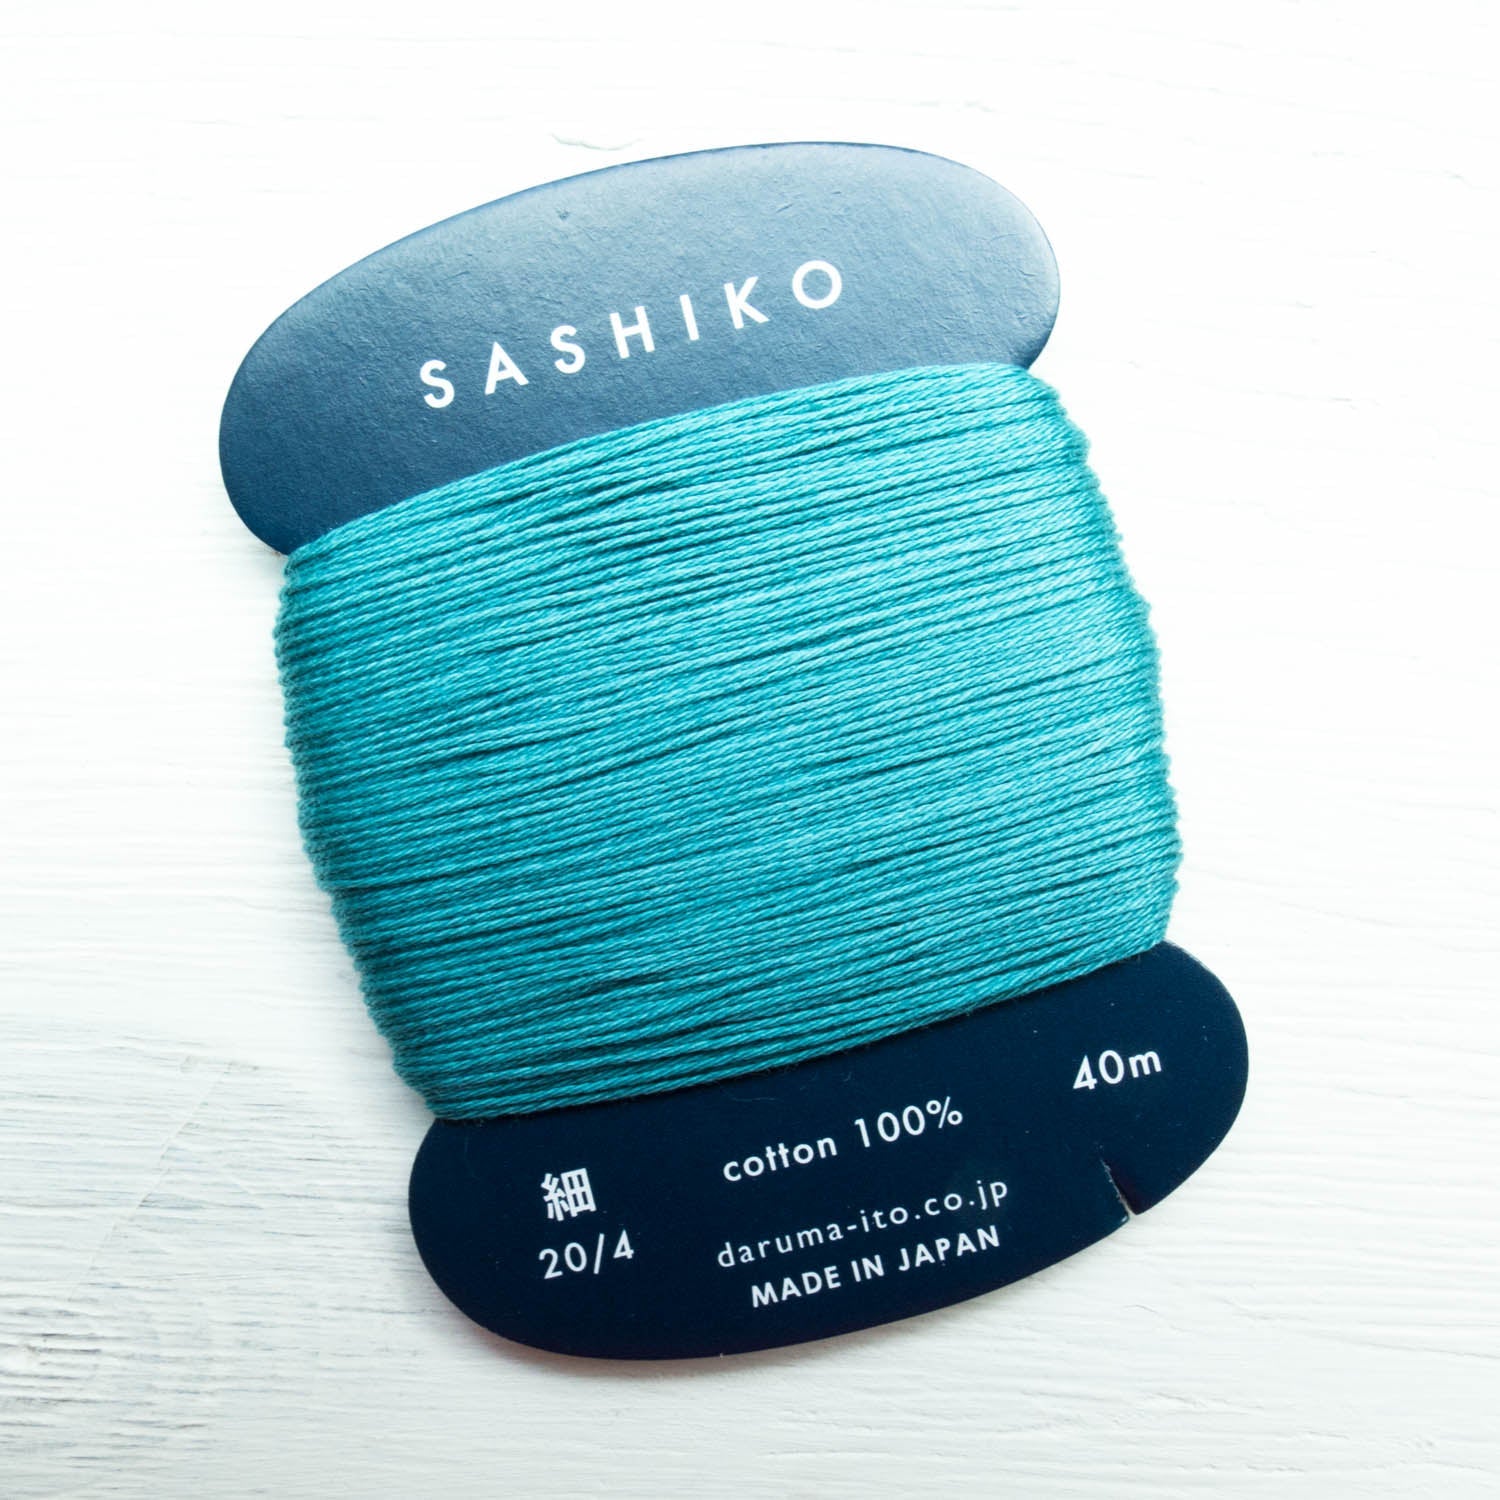 ORIM - Daruma - Sashiko Cotton Thread 20/4 - 0205 - Peacock